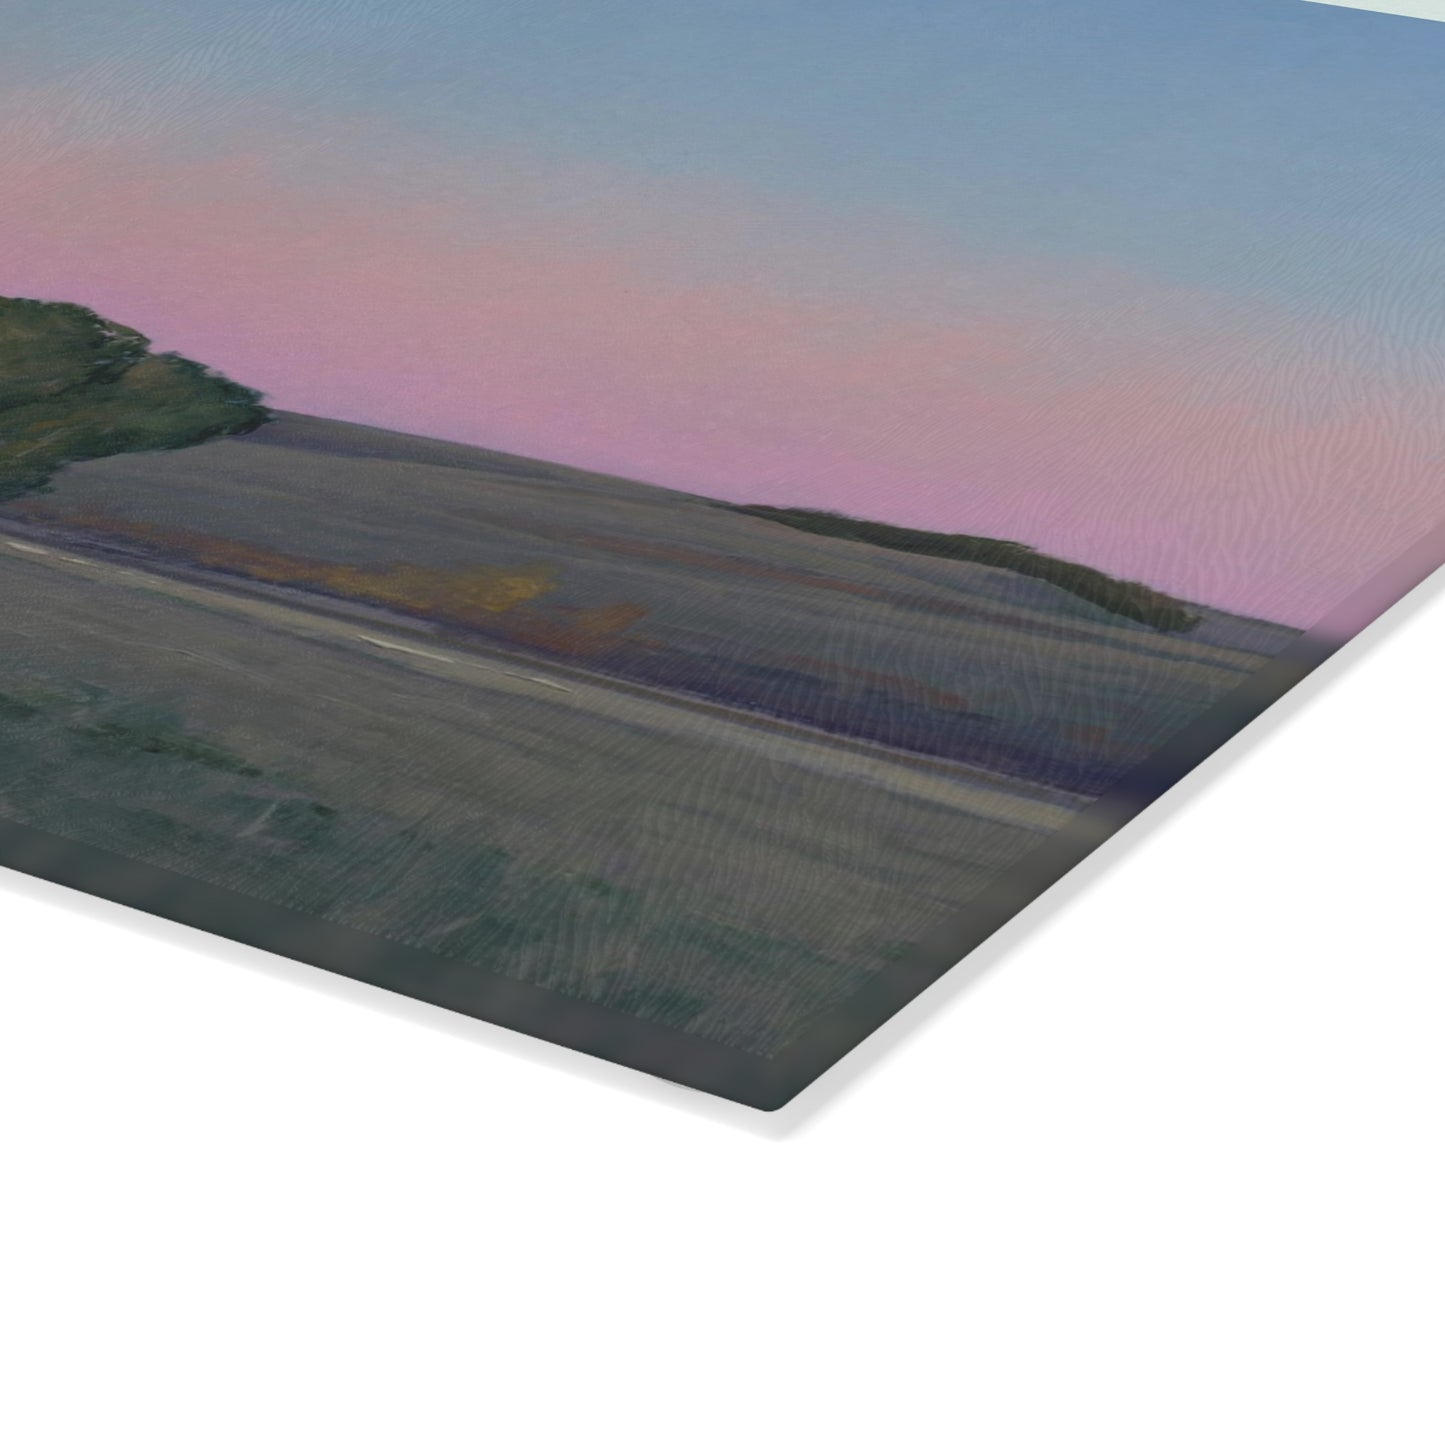 Ben Bauer: "Moonrise in Lowry, MN" - Glass Cutting Board